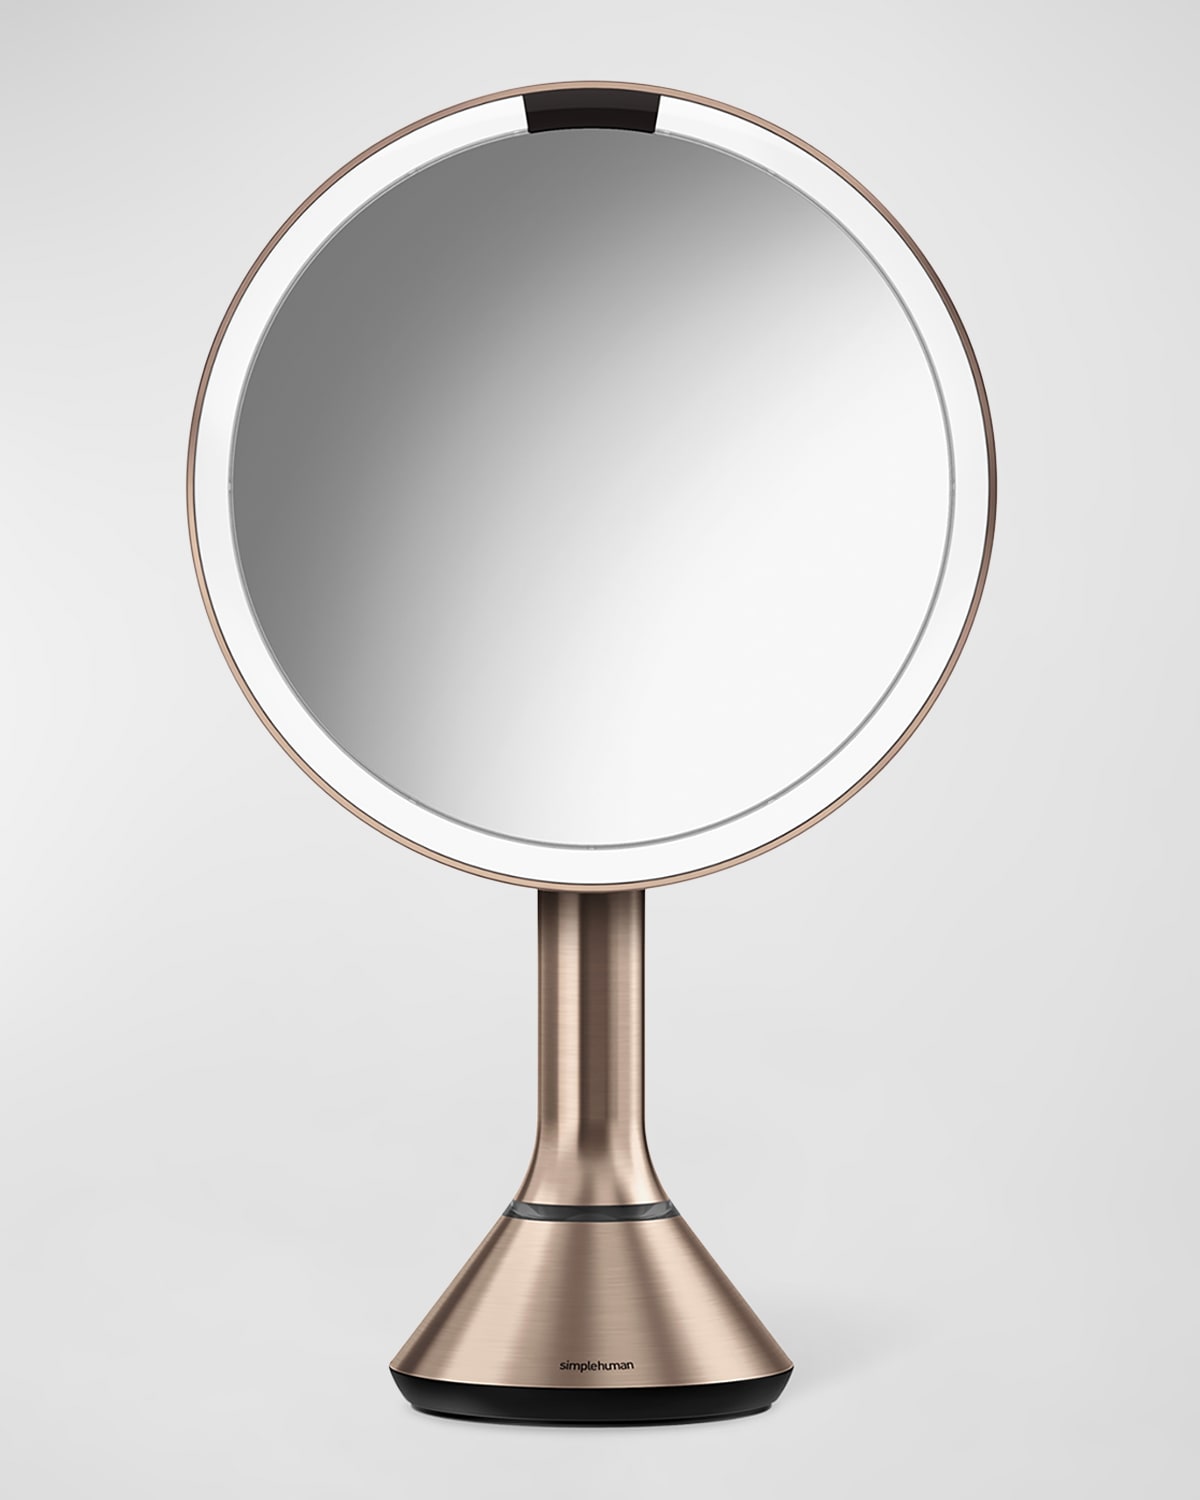 8" Sensor Mirror With Brightness Control, Rose Gold